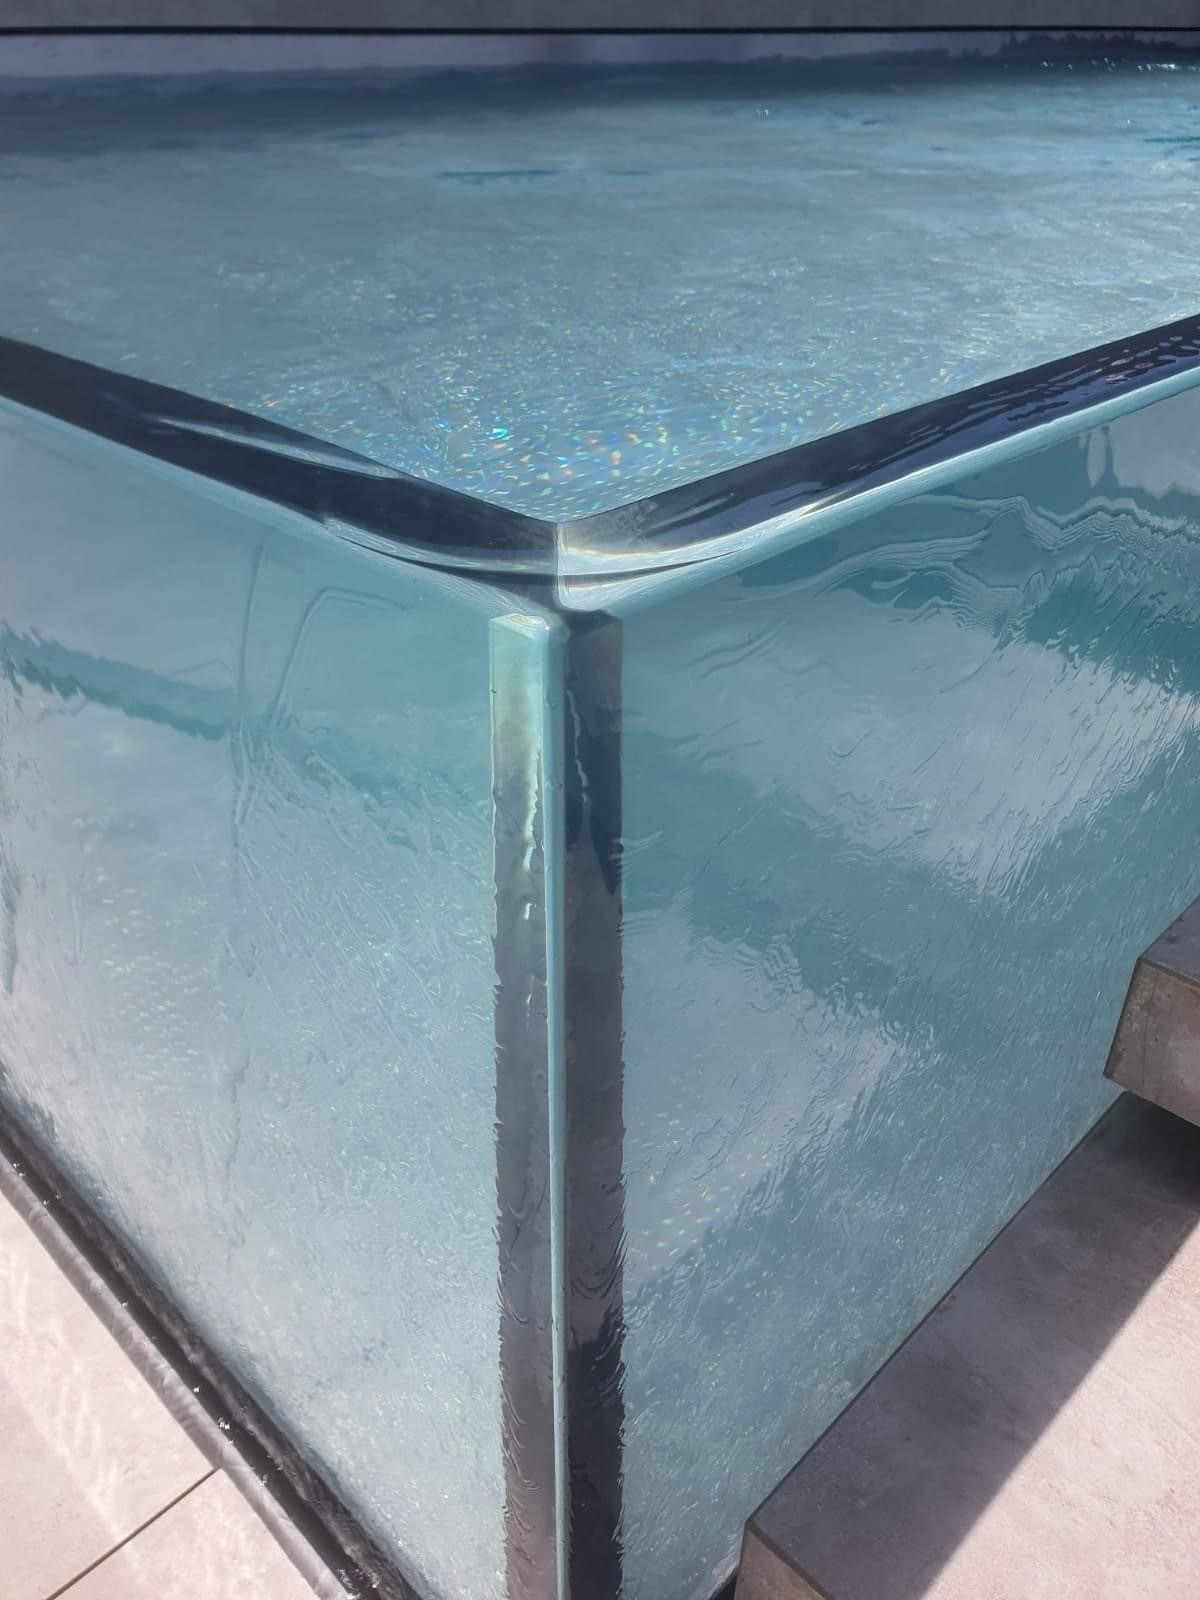 Detail of IMAGINOX swimming pool glass corner